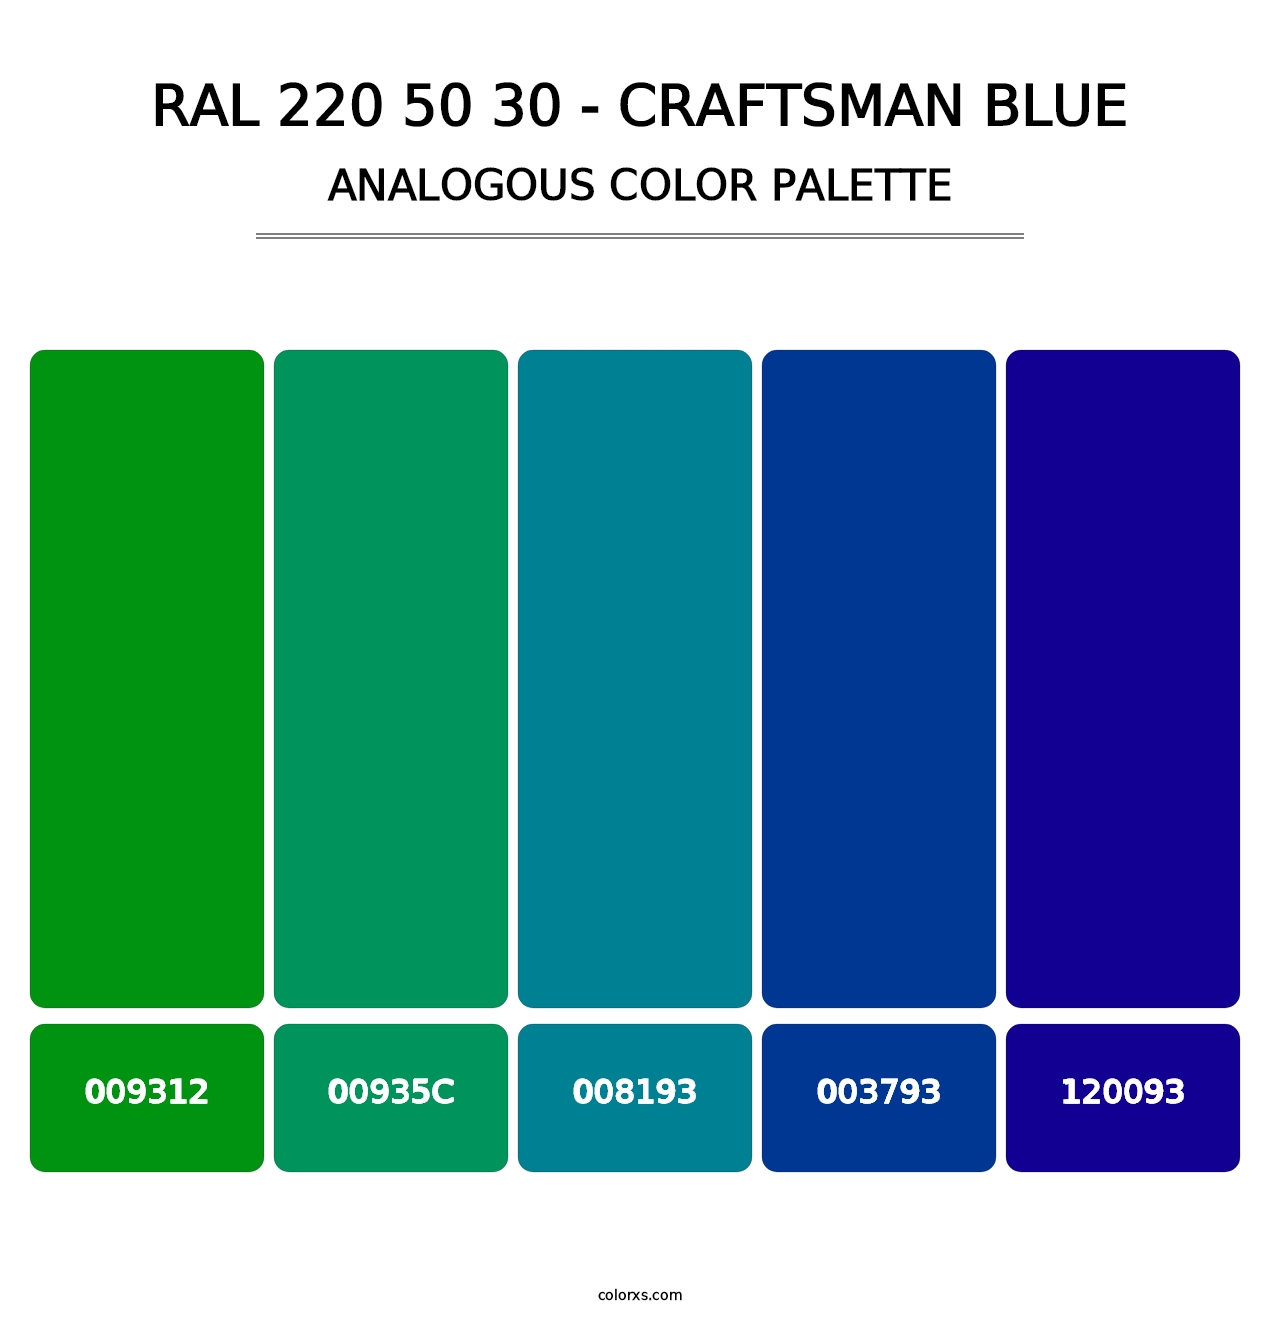 RAL 220 50 30 - Craftsman Blue - Analogous Color Palette